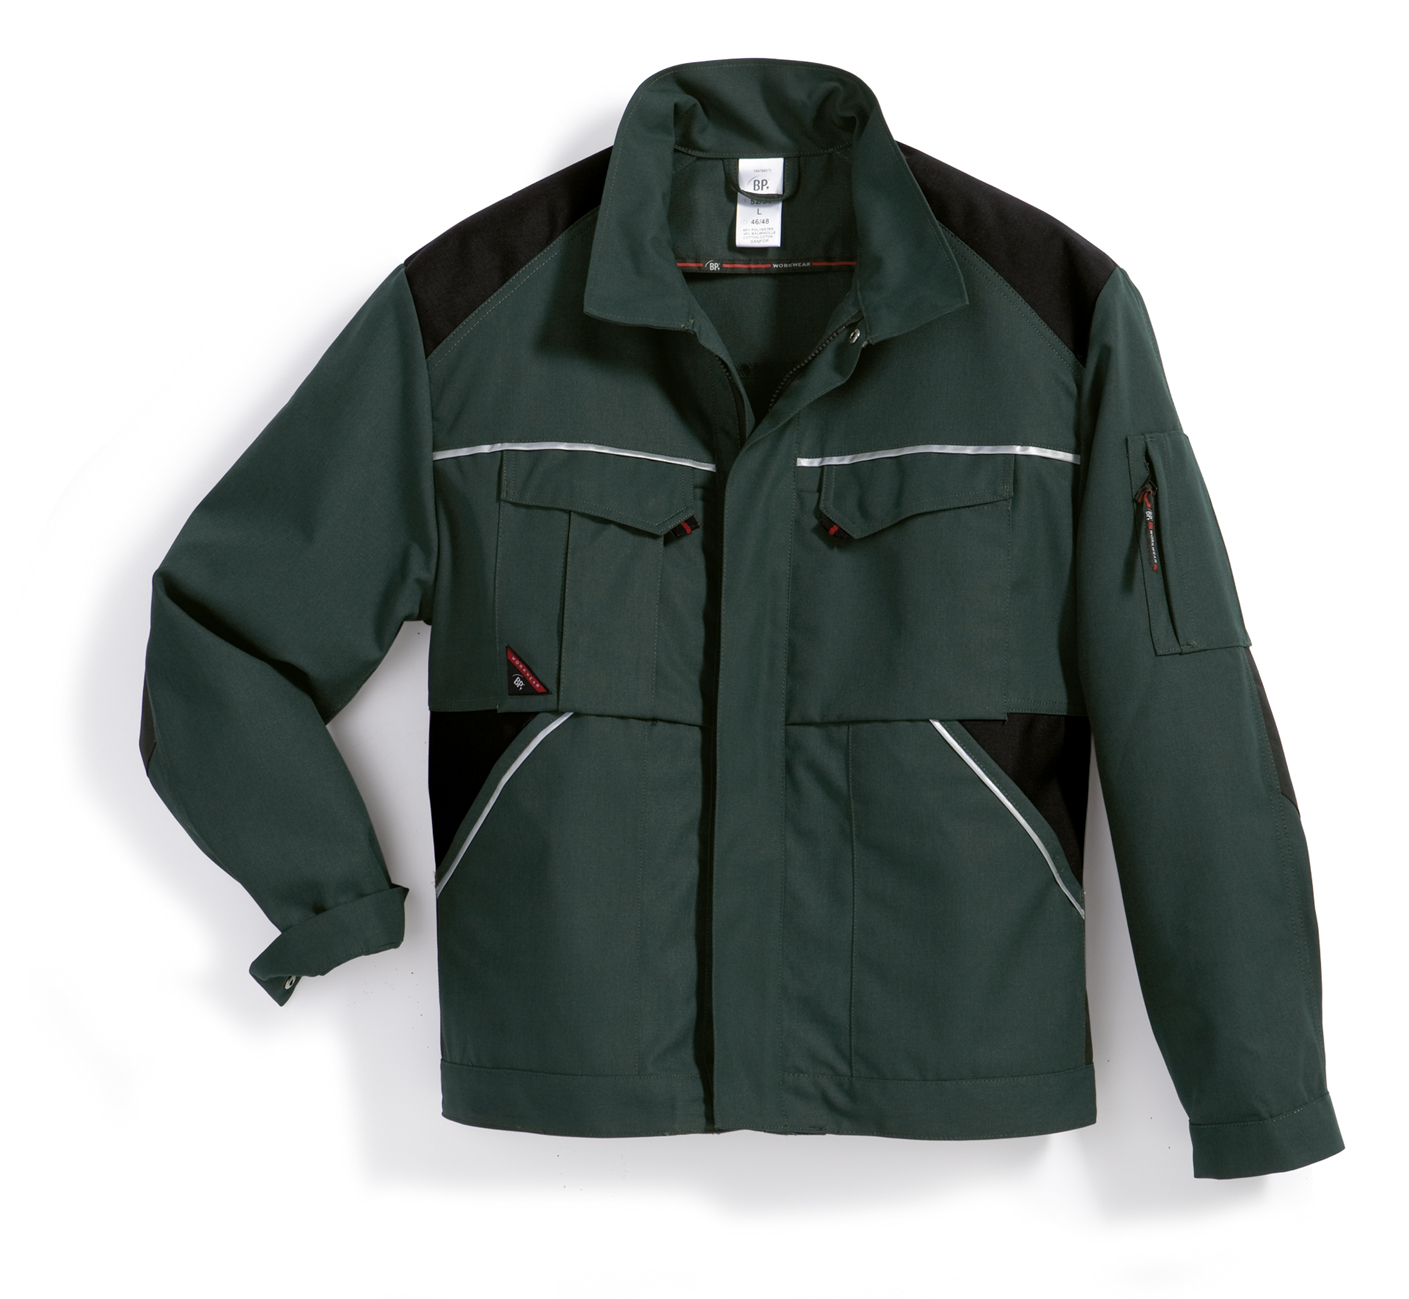 BP Blouson Jacke Arbeitsjacke Bundjacke Berufsjacke Arbeitskleidung Berufskleidung dunkelgrün